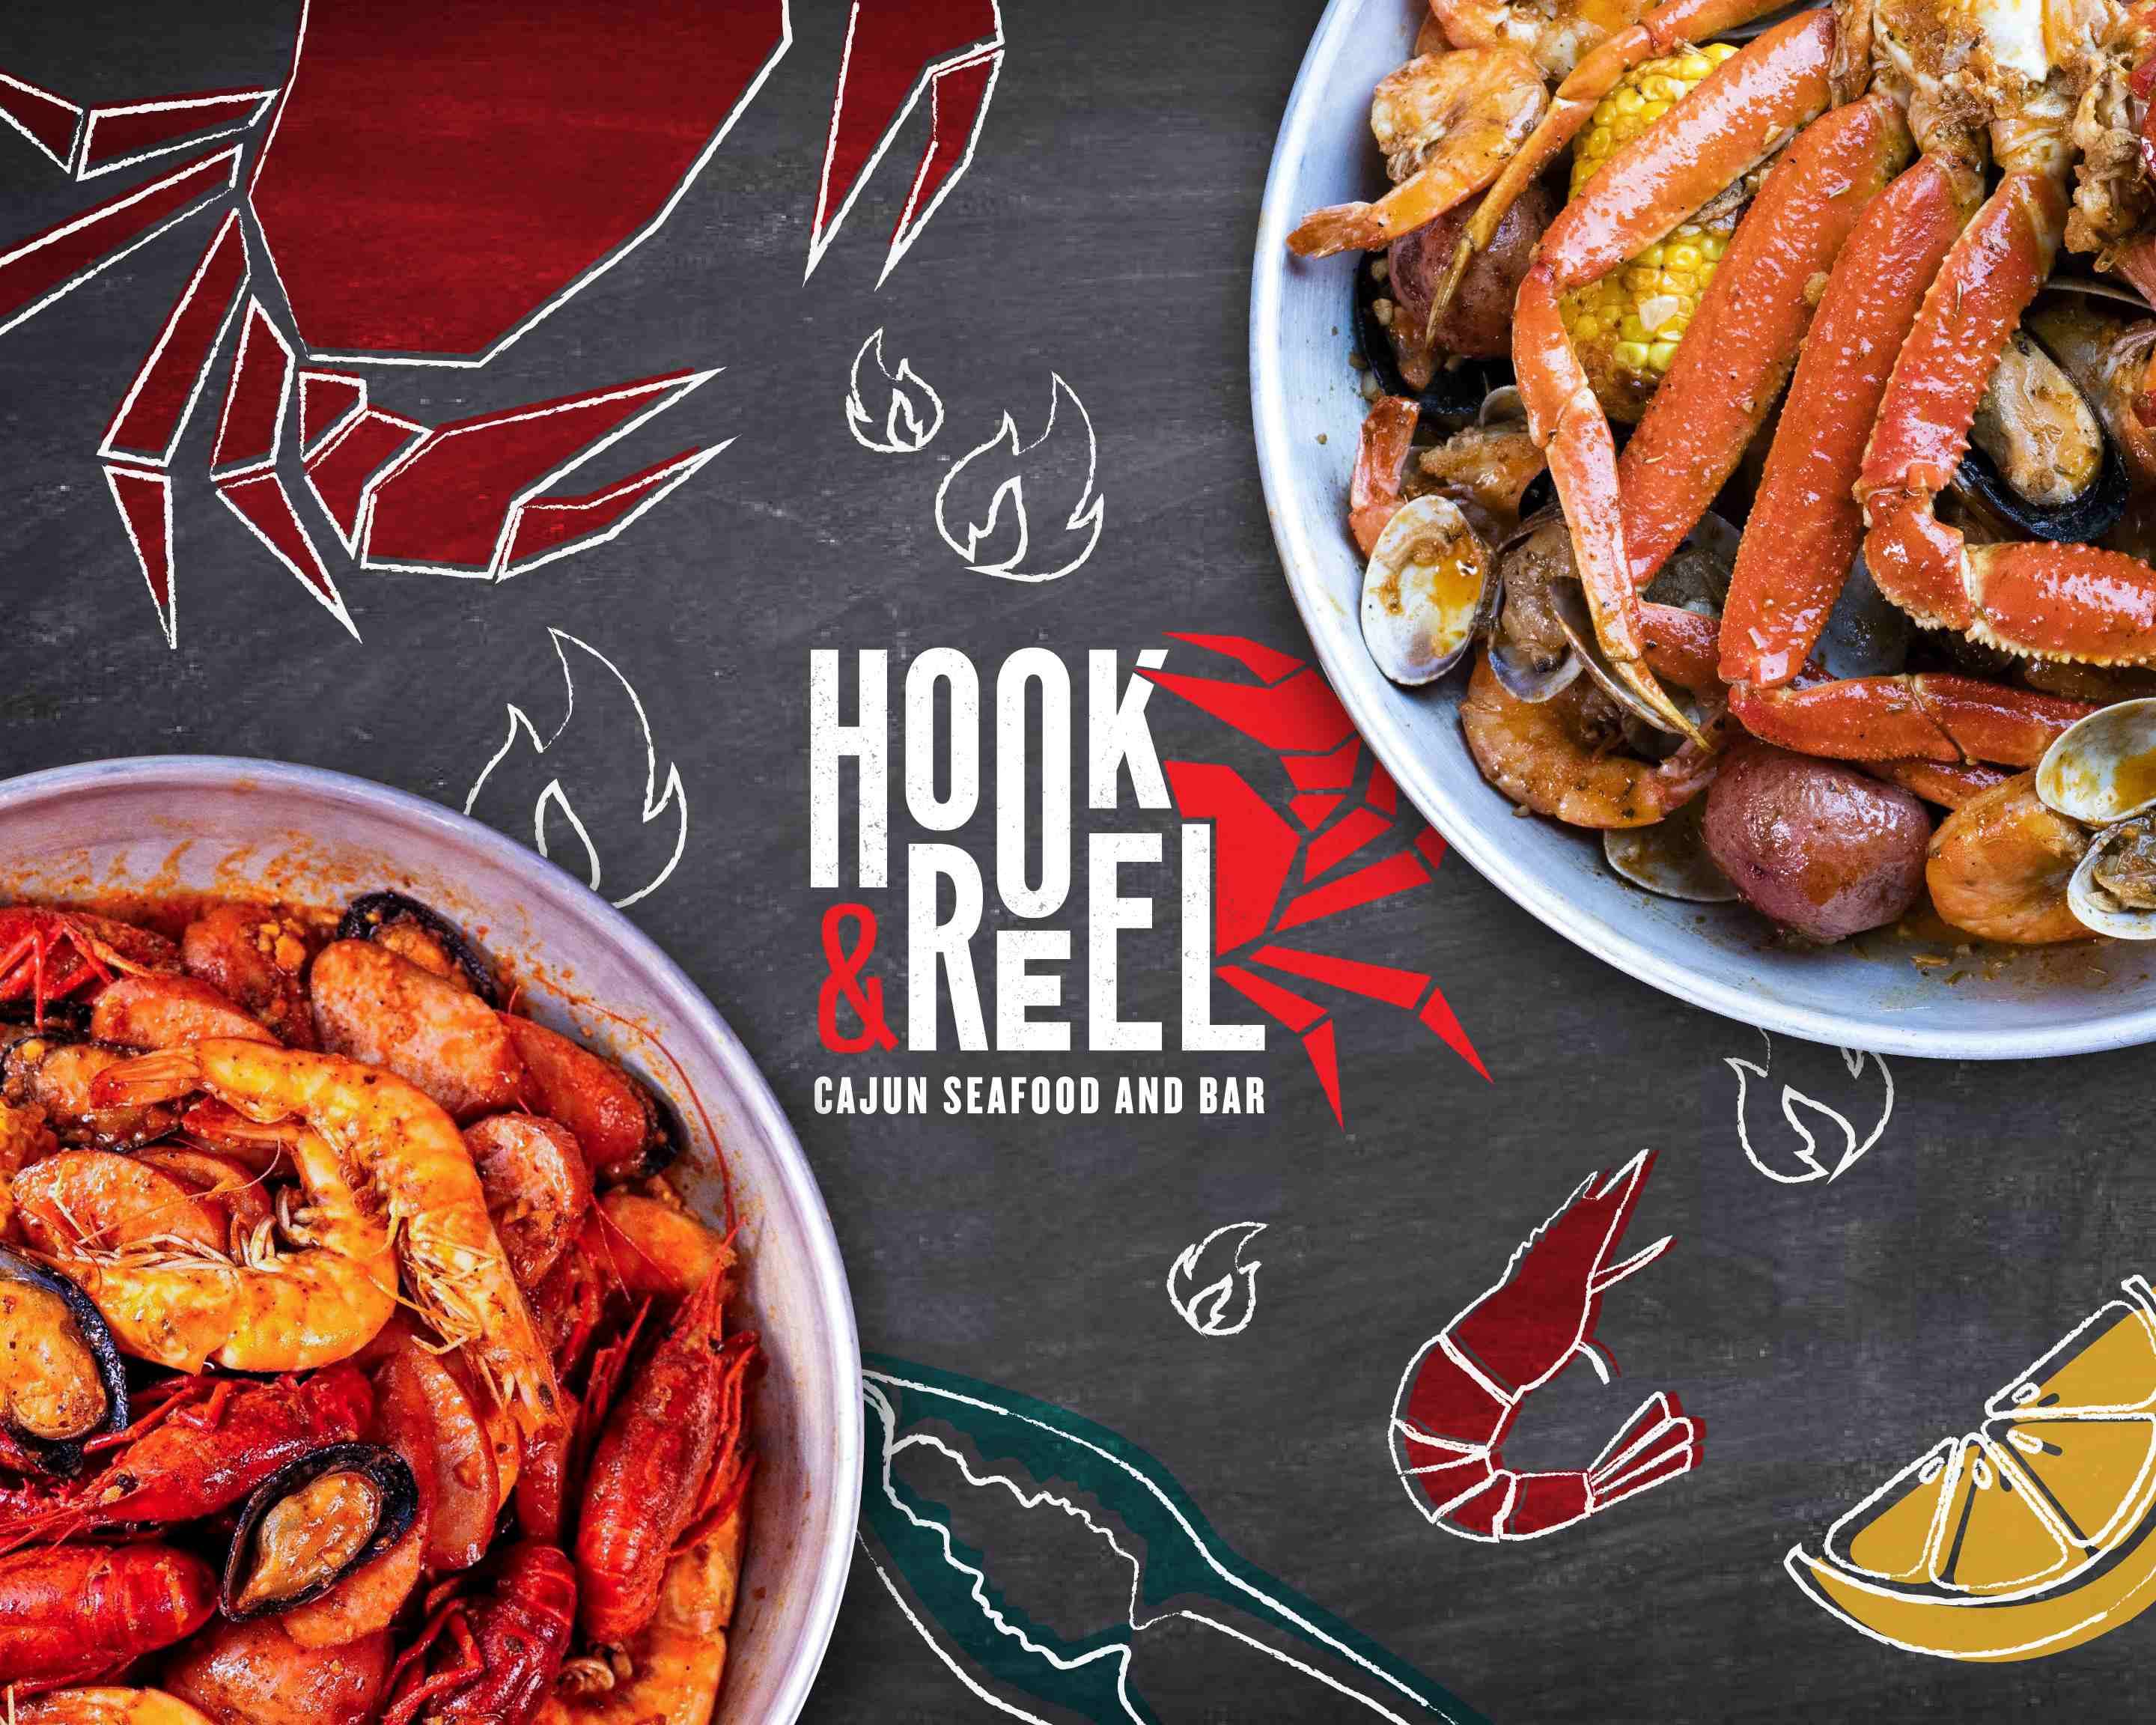 hook & reel cajun seafood & bar